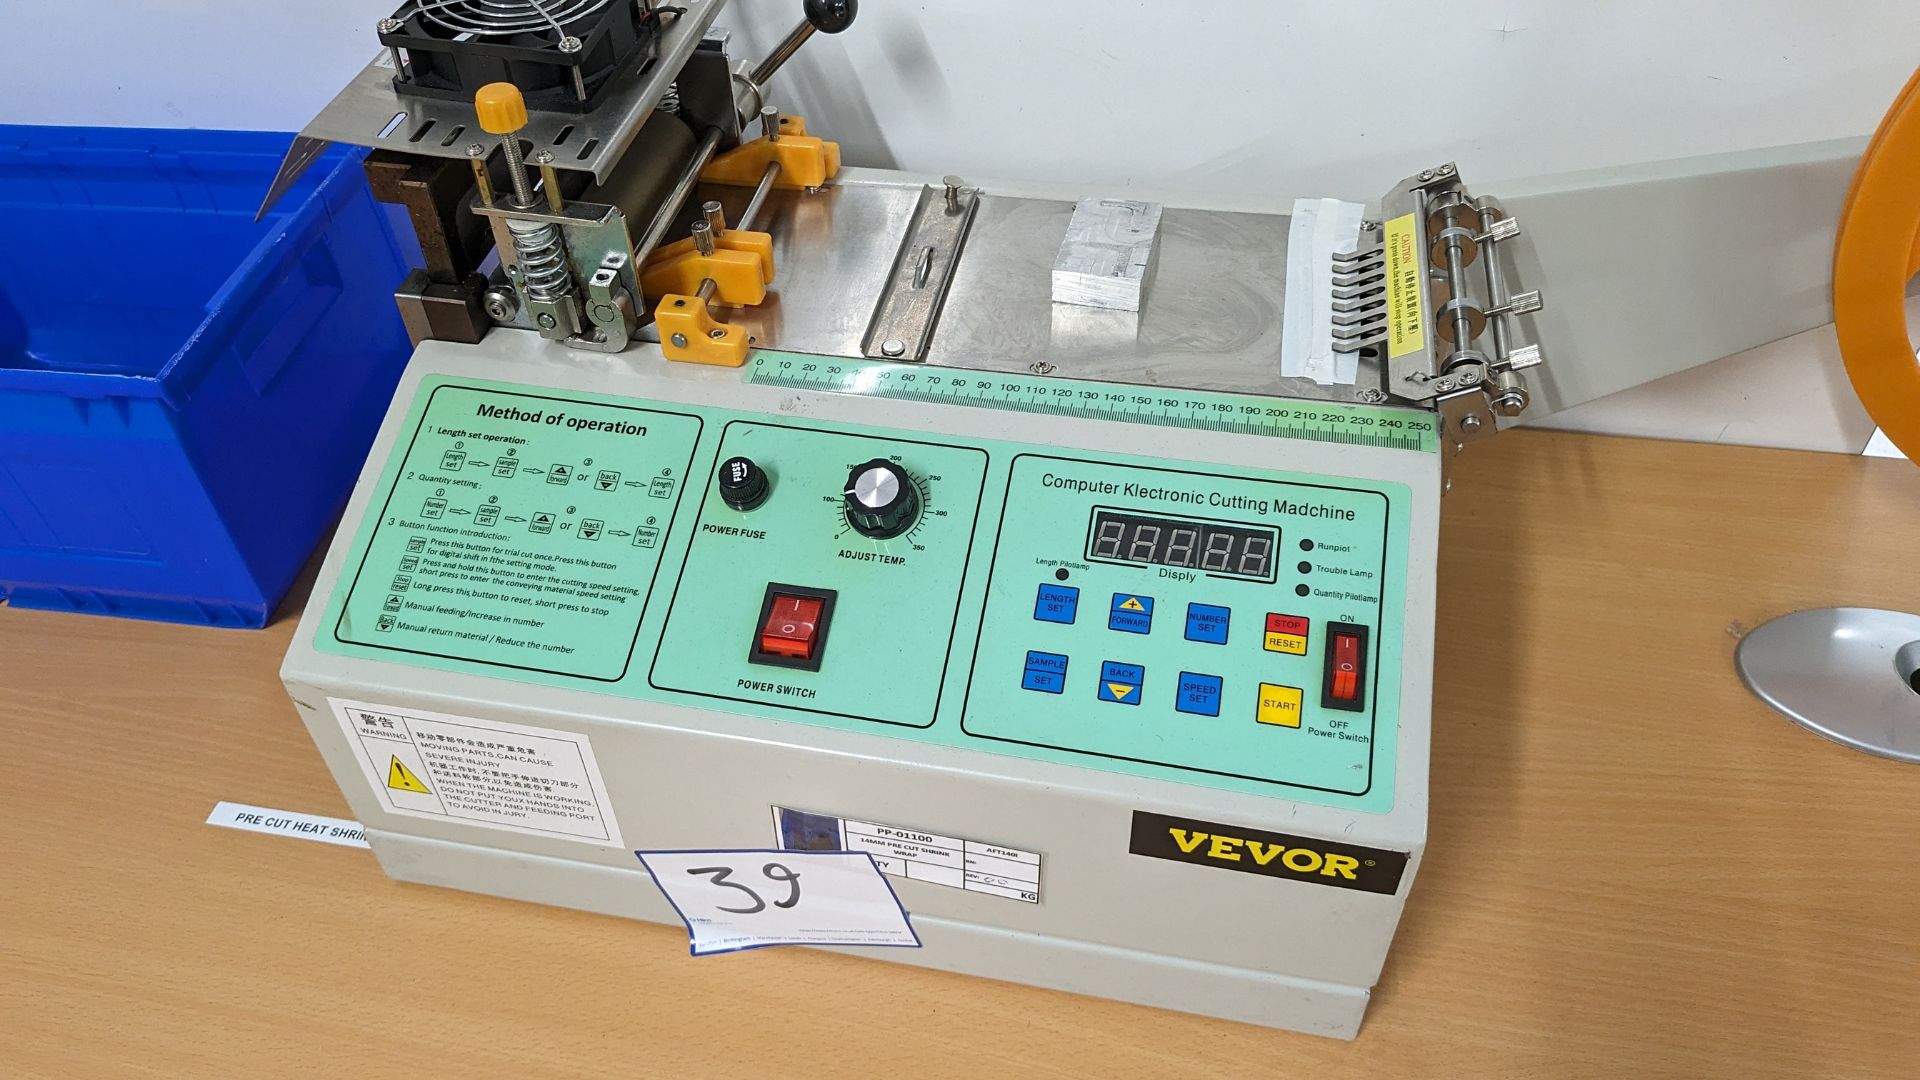 VevorComputer Klectronic Cutting Machine